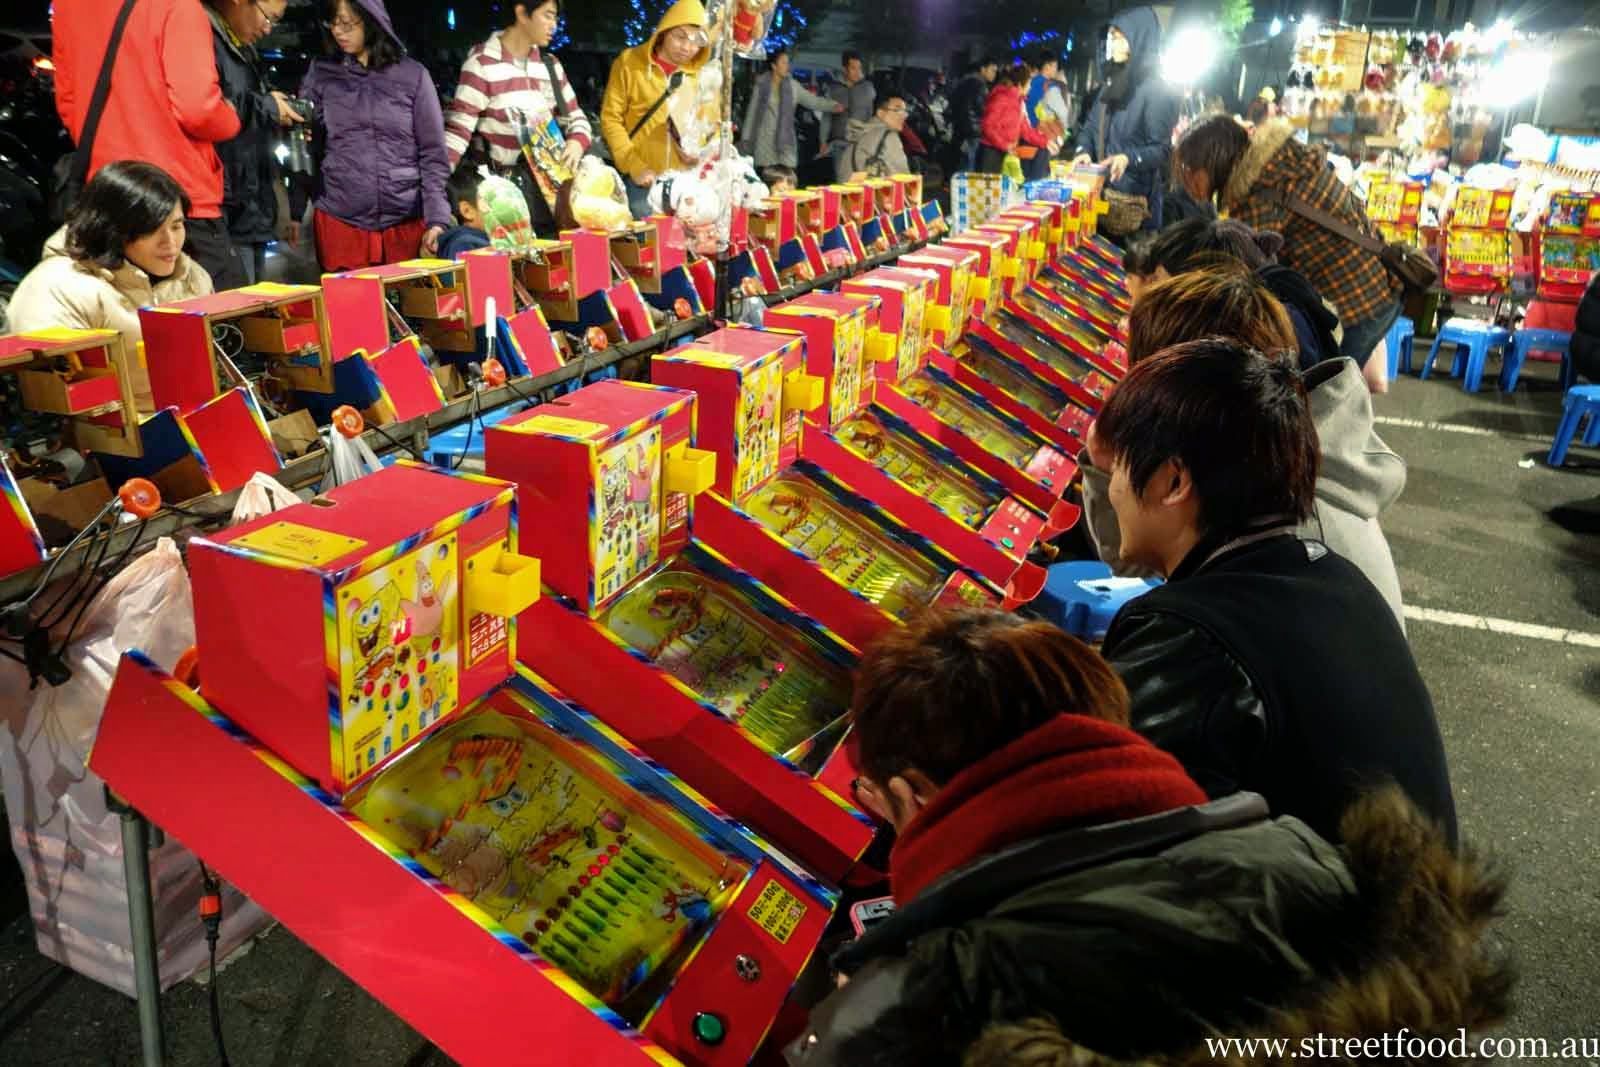 Old school bingo machines in Taiwan night markets.